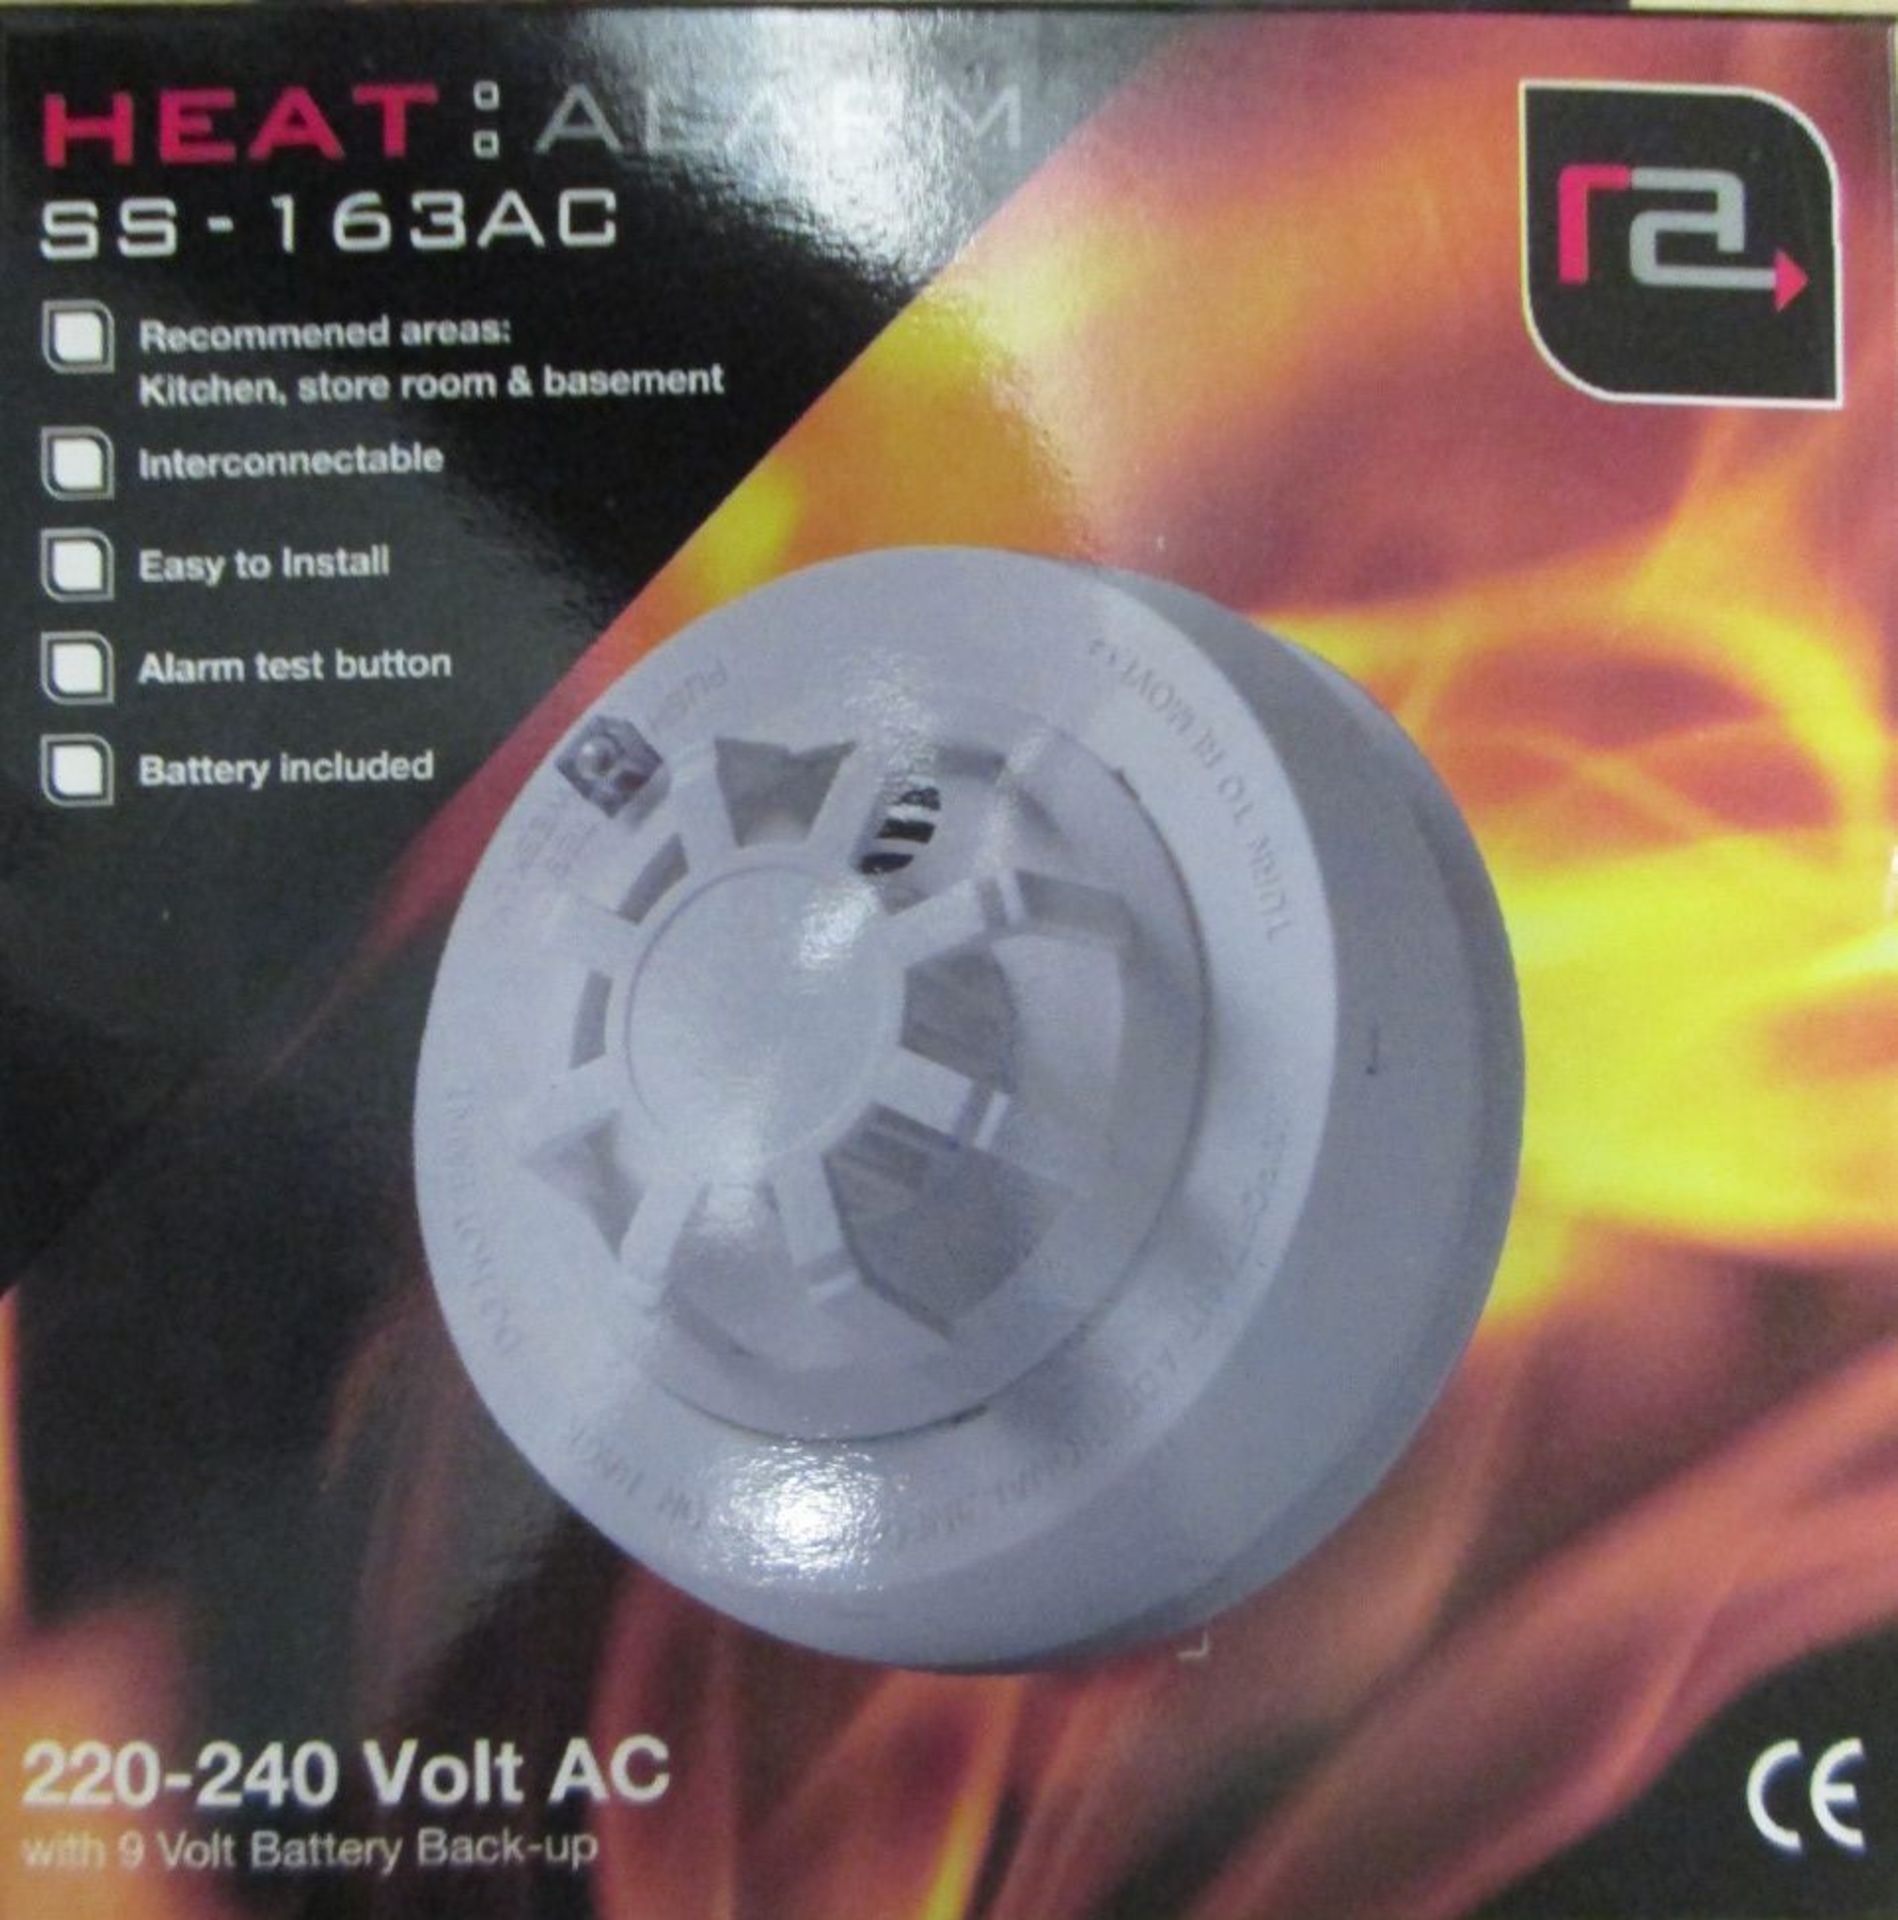 10 x RA SS-163AC Heat Alarms - Brand New, RRP £11.99 Each